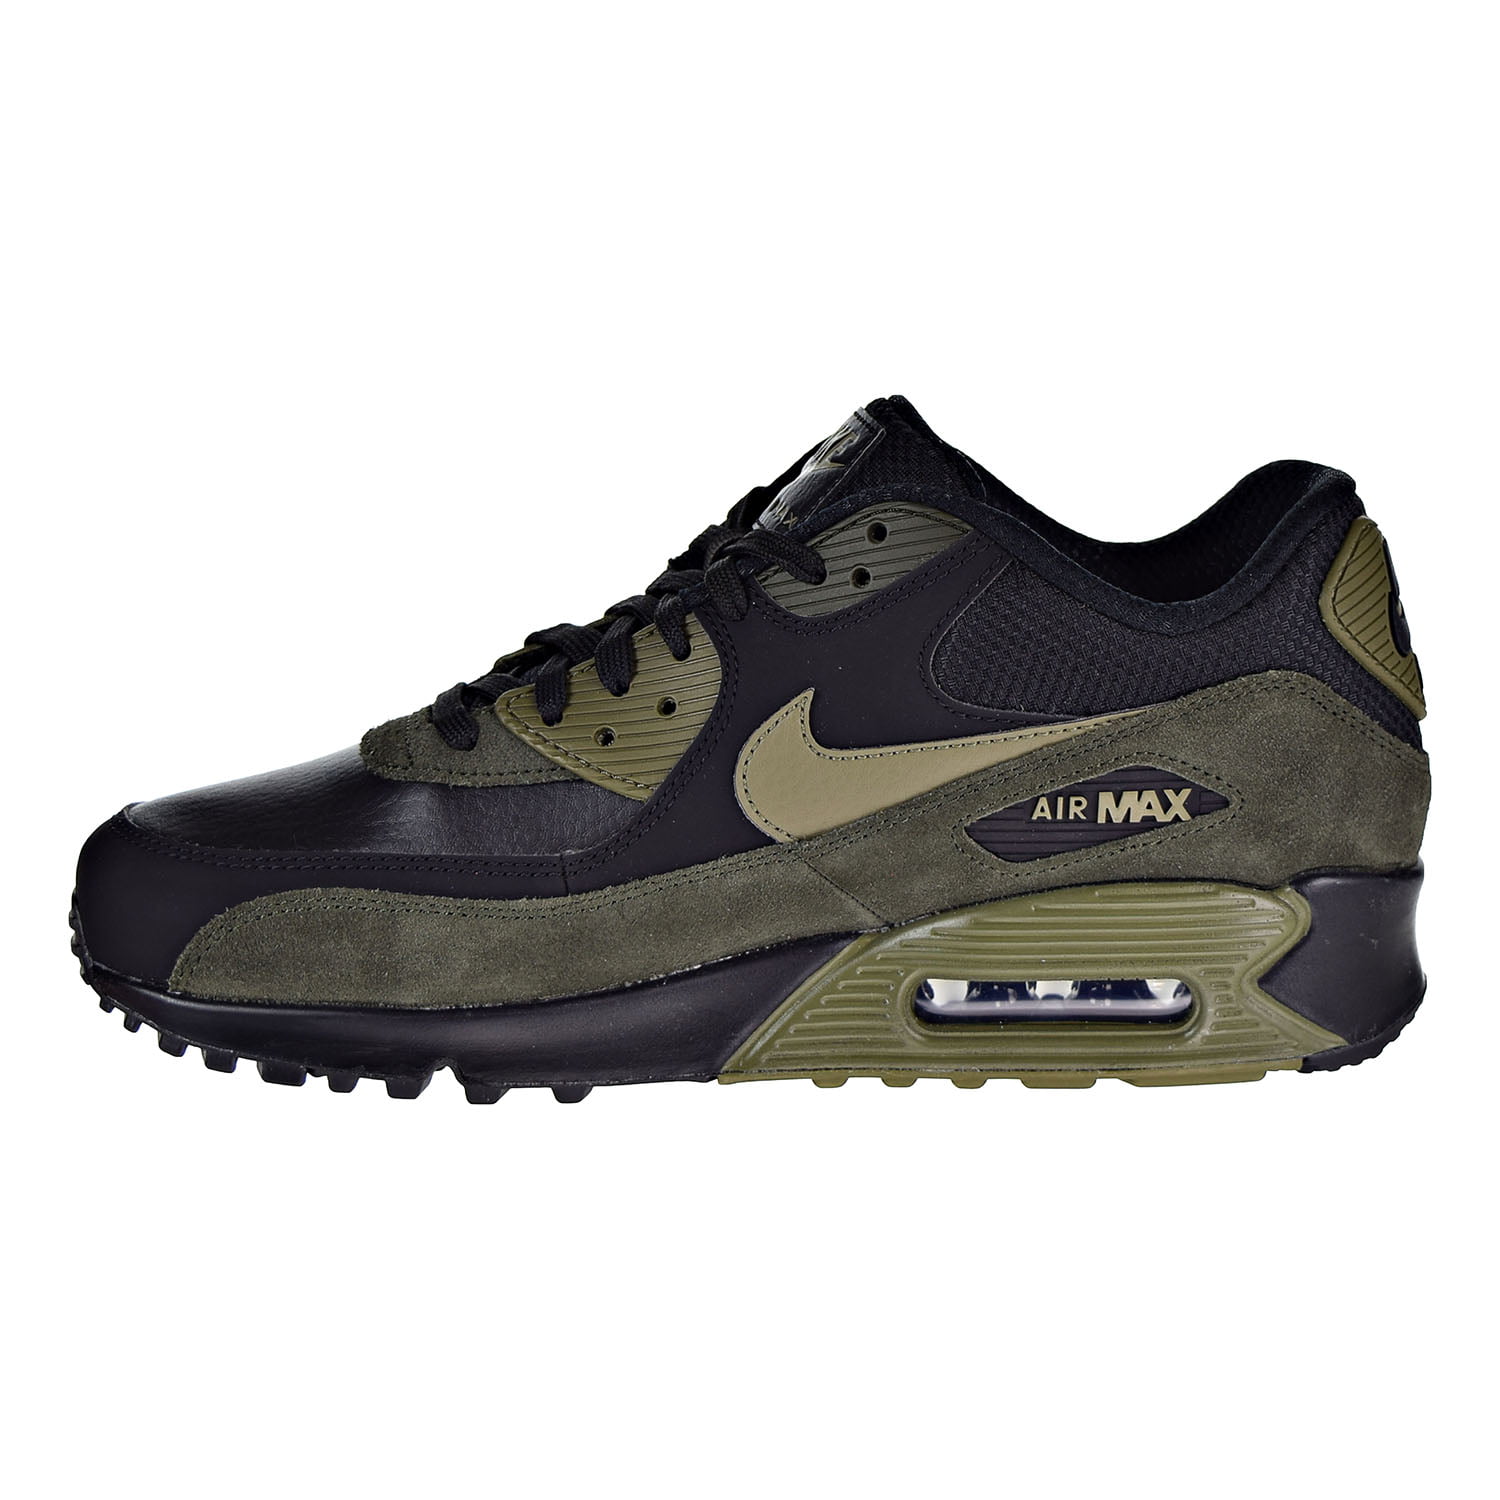 tierra suelo Movimiento Nike Air Max 90 Leather Men's Shoes Black/Medium Olive-Sequoia 302519-014 -  Walmart.com